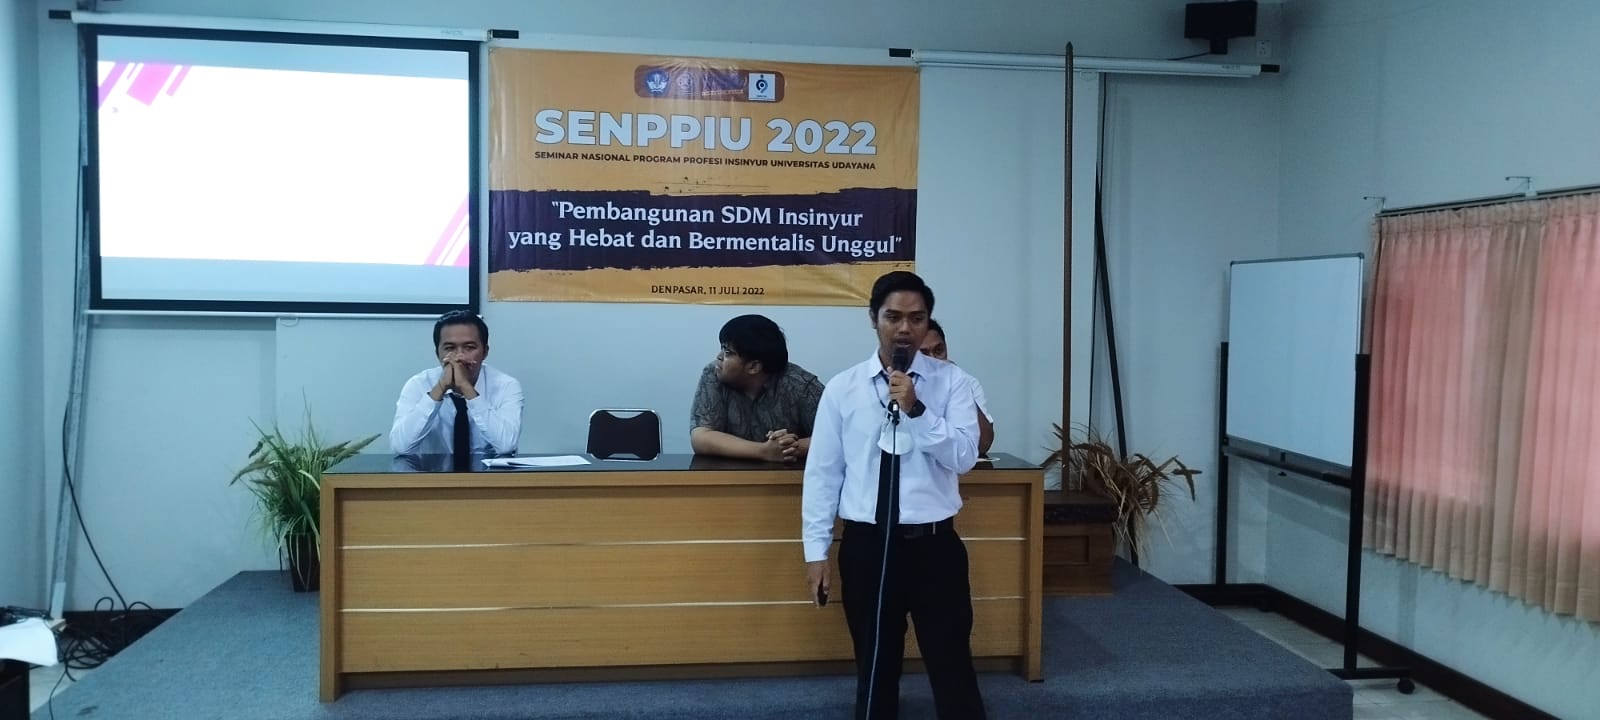 Seminar Nasional Program Profesi Insinyur Pascasarjana UNUD – Senppiu 2022